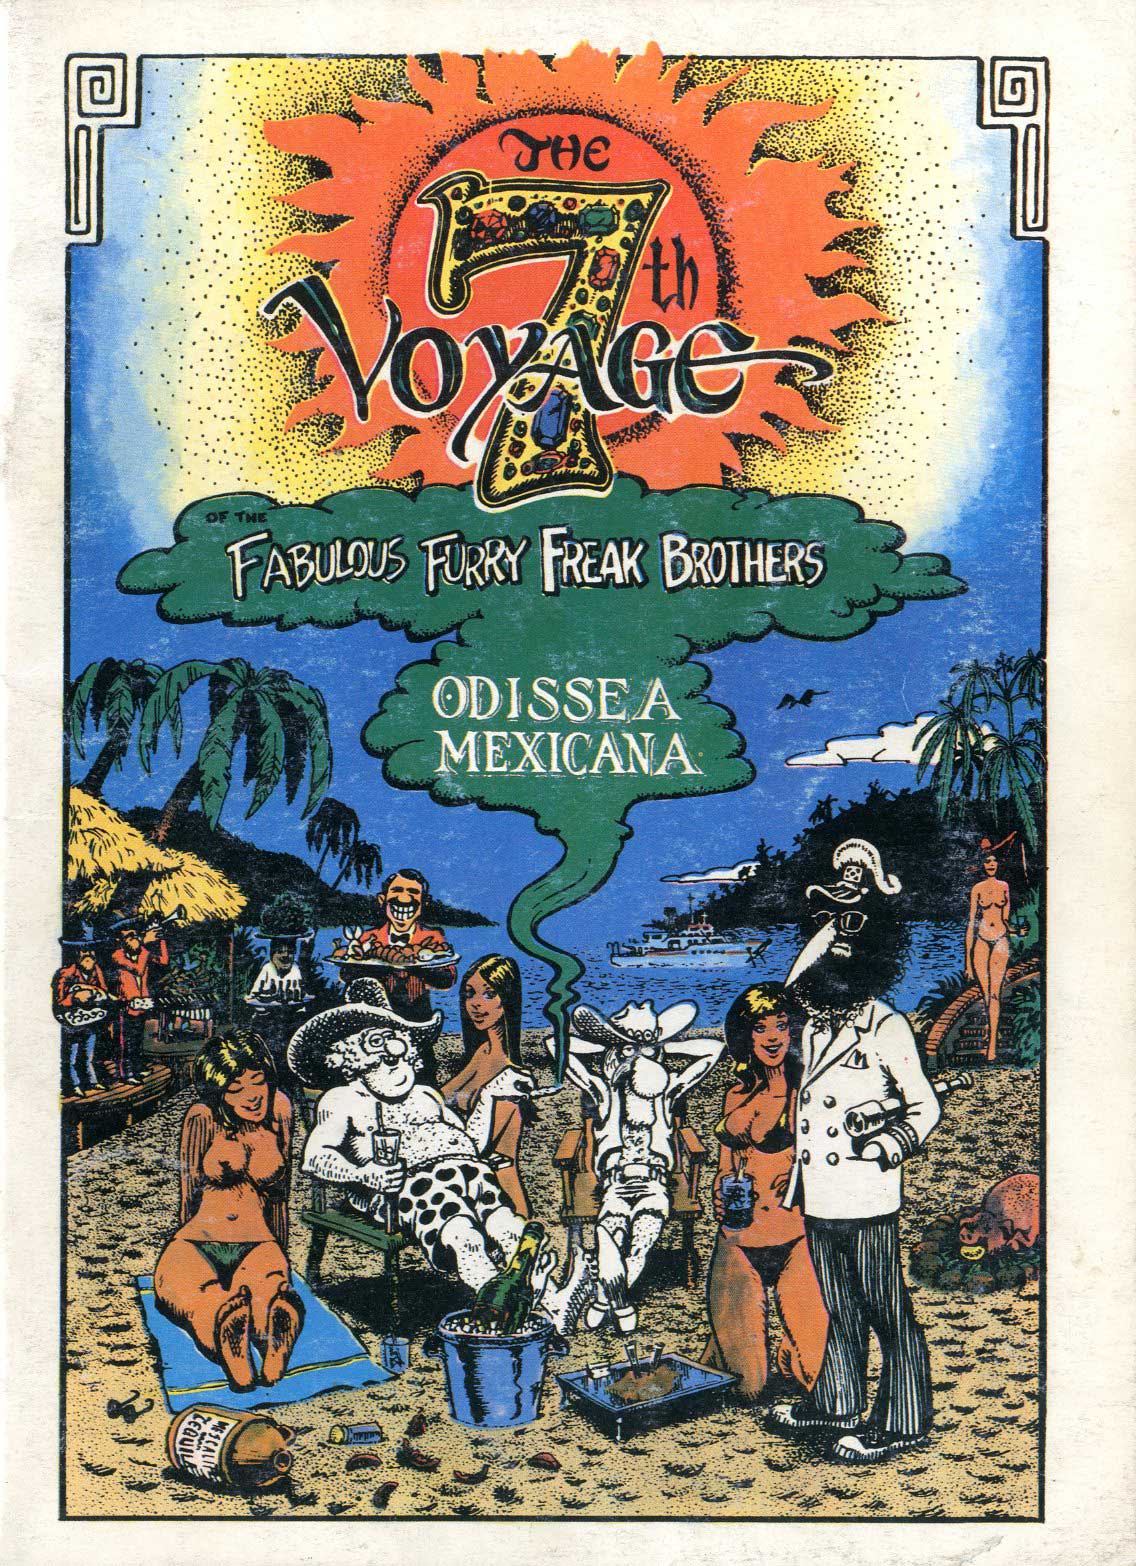 7 Voyage Odissea Mexicana